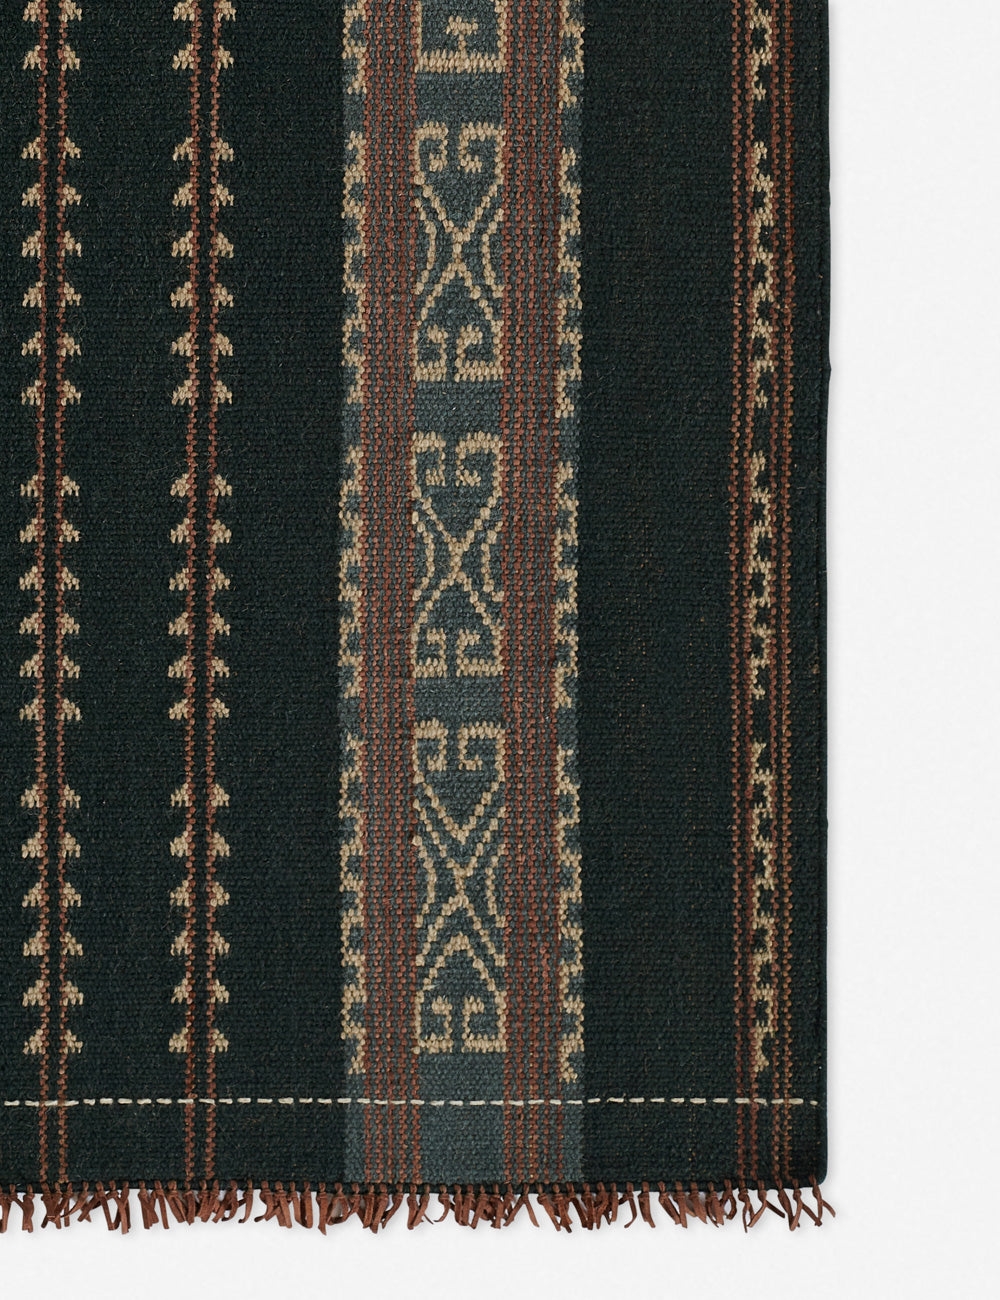 Lemieux et Cie Voltaire Handwoven Wool Rug by Momeni - Image 1